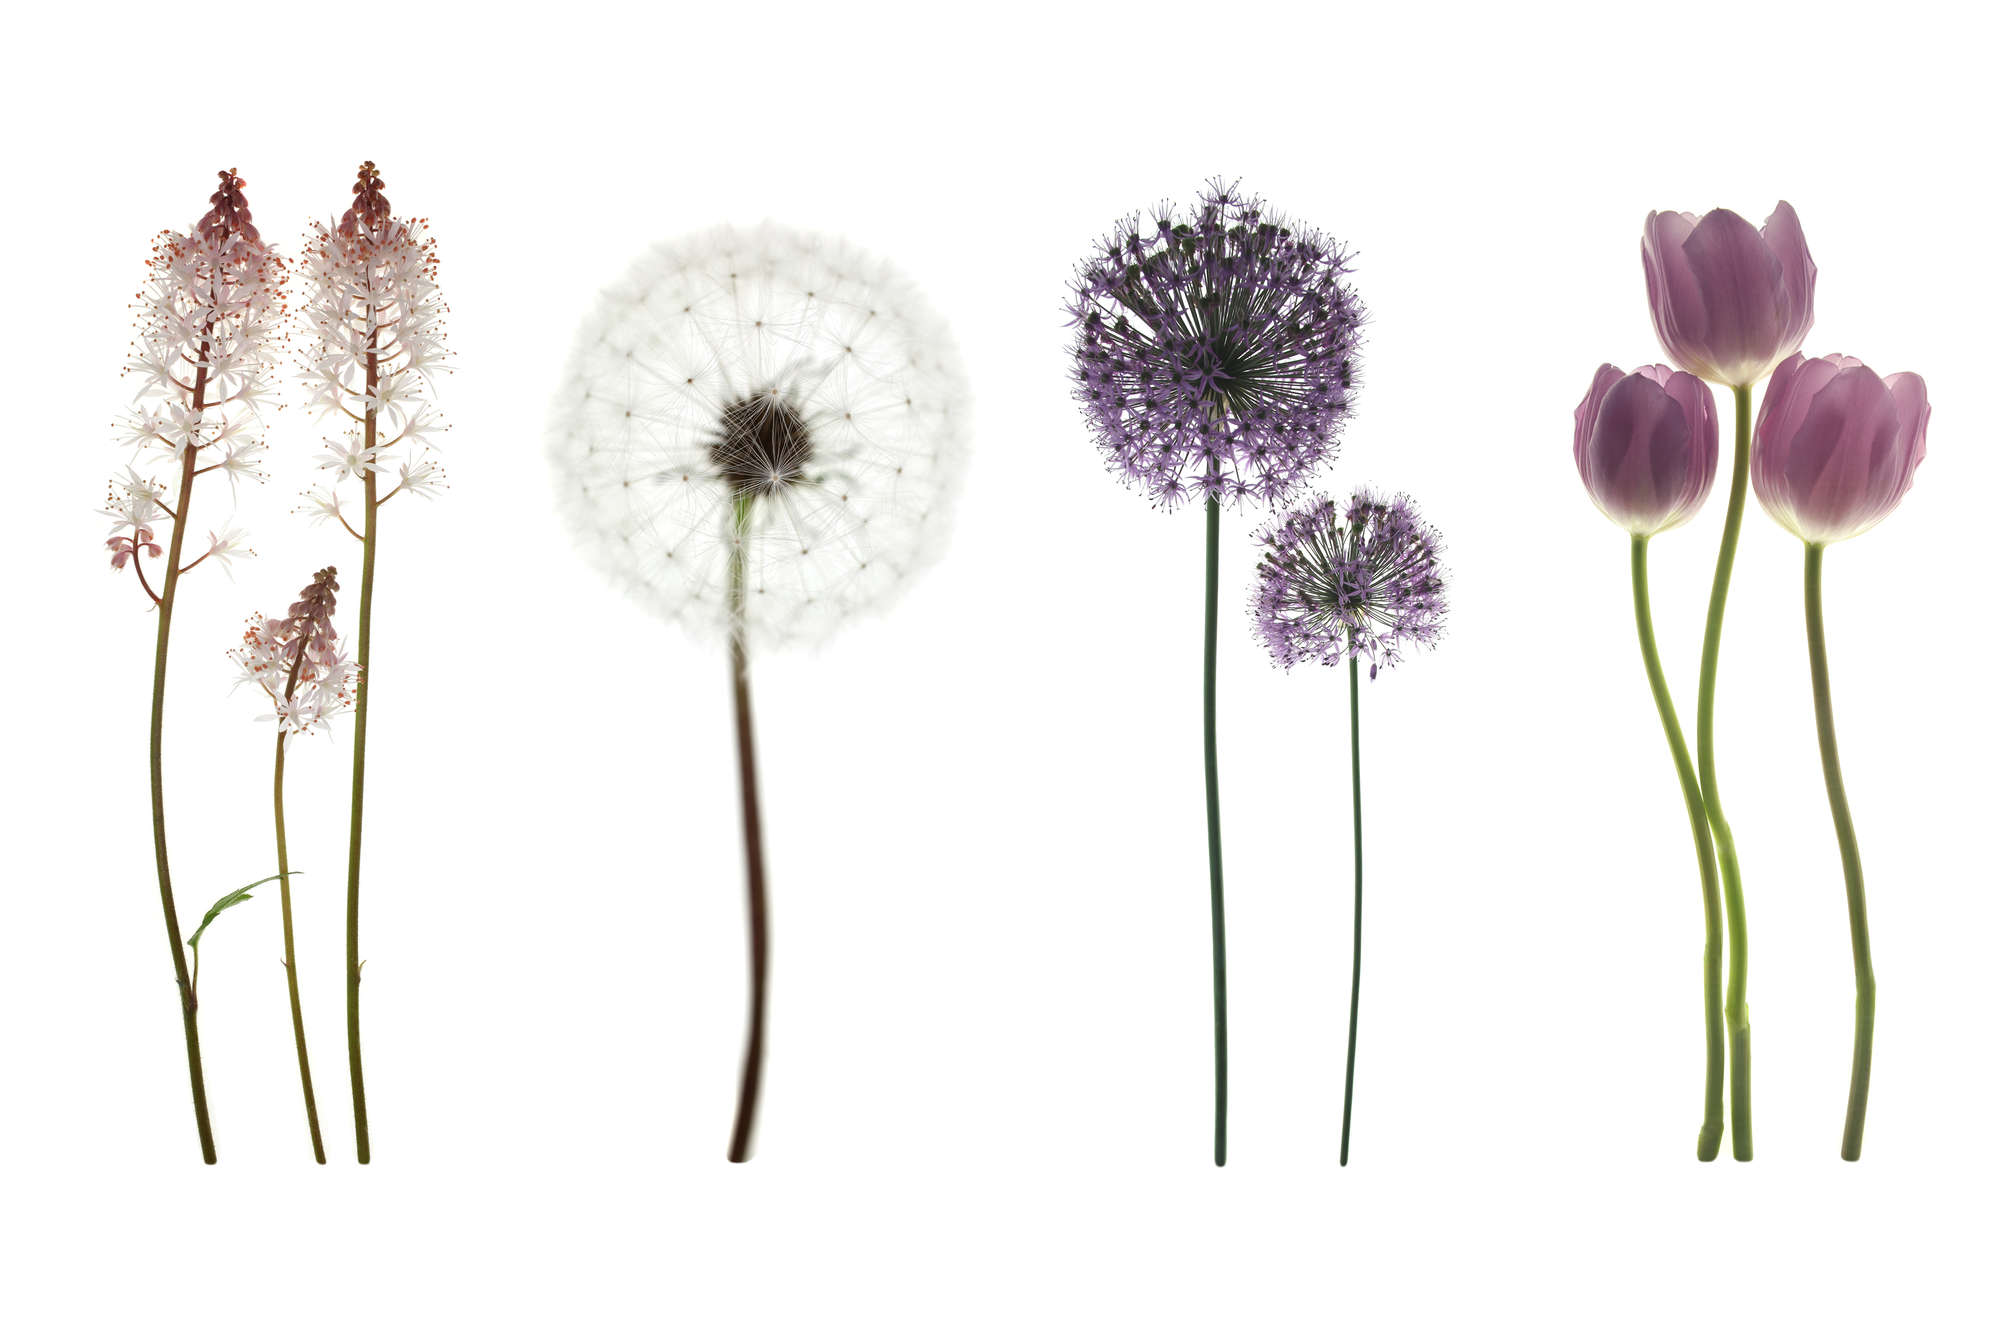             Fototapete mit Blumenvielfalt – Perlmutt Glattvlies
        